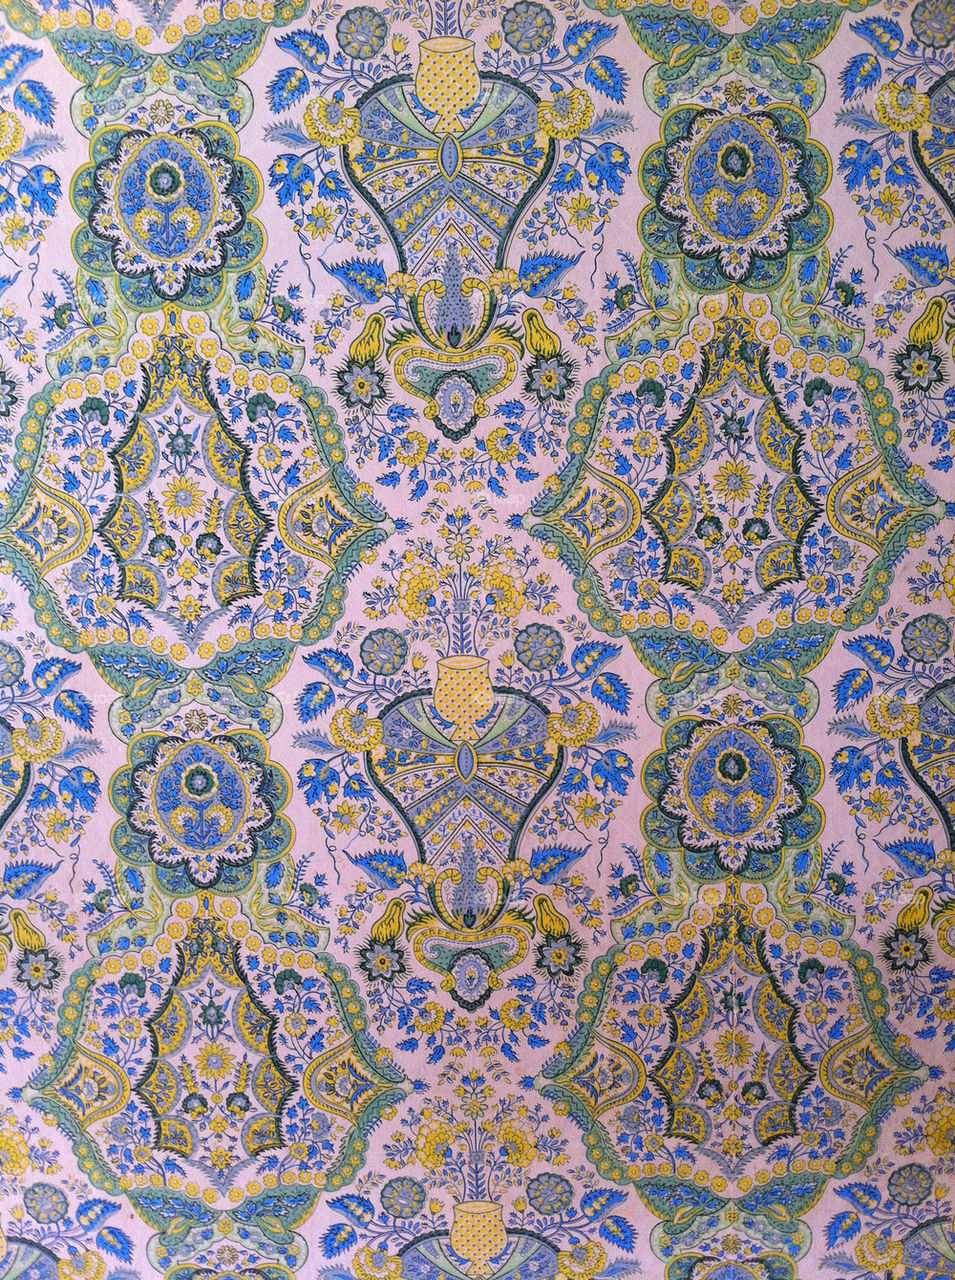 malmö sweden pattern wall by martinsjobeck